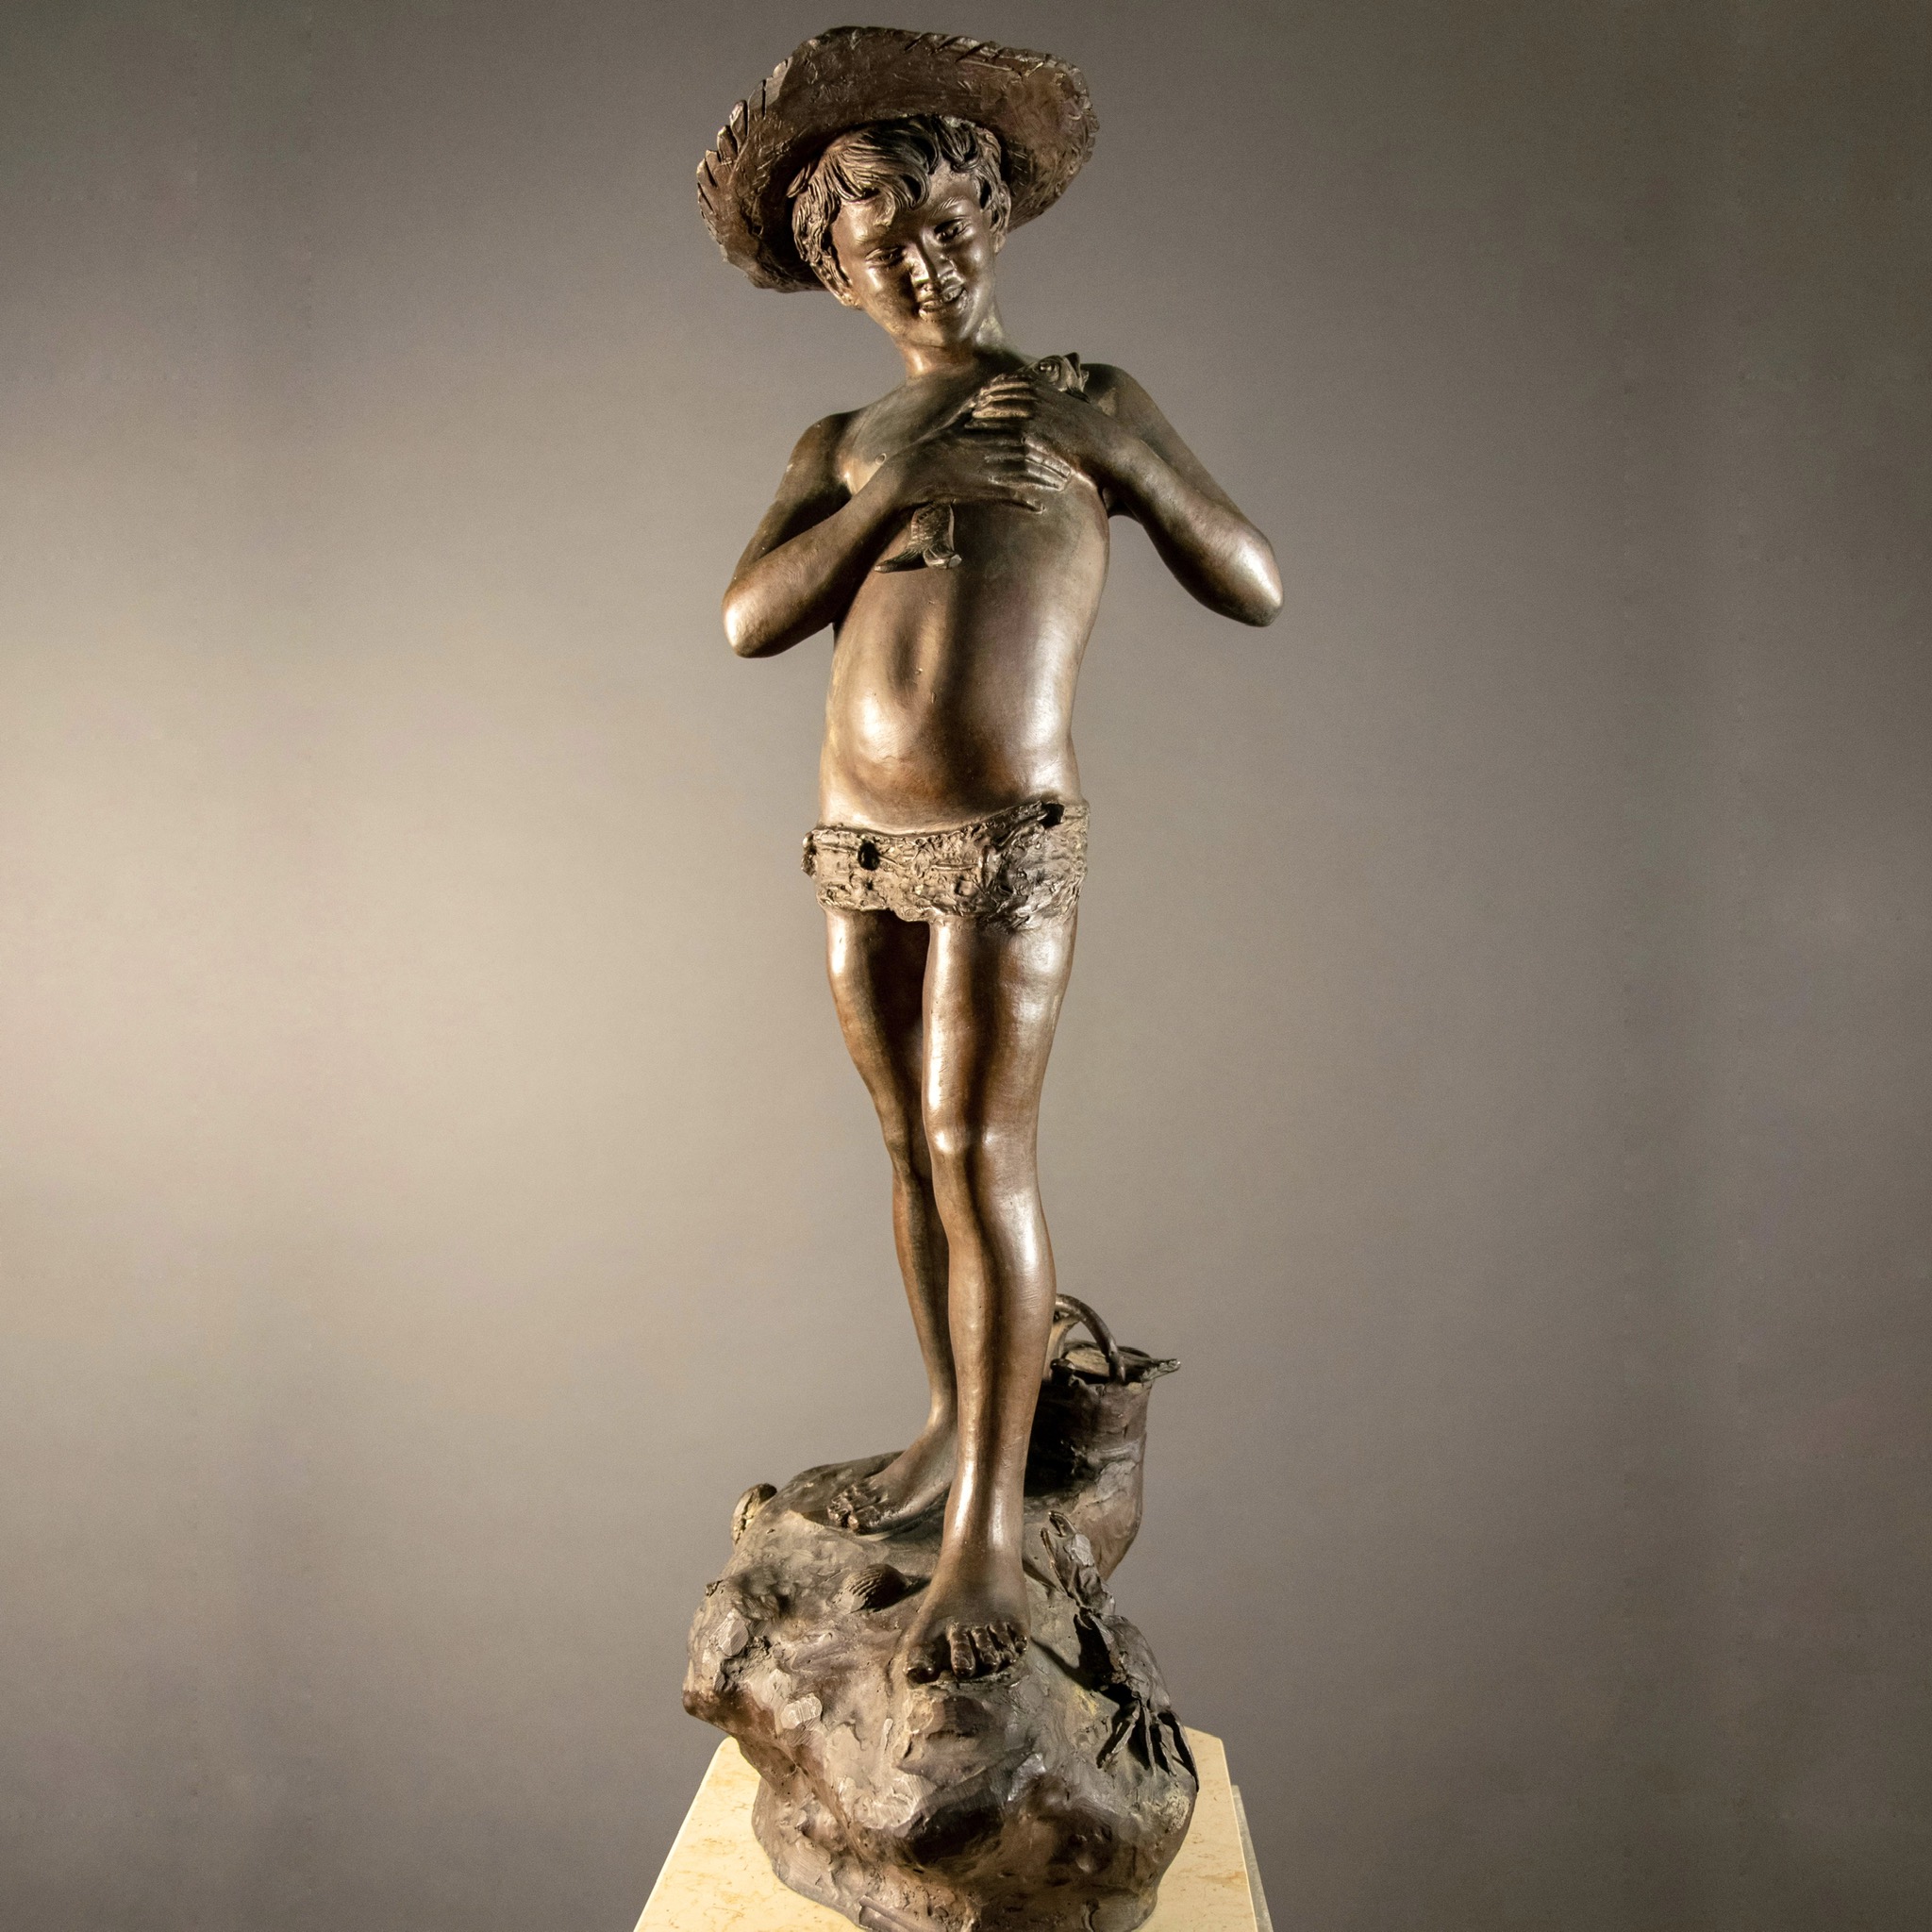 Giovanni Varlese sculpture de pêcheur en bronze